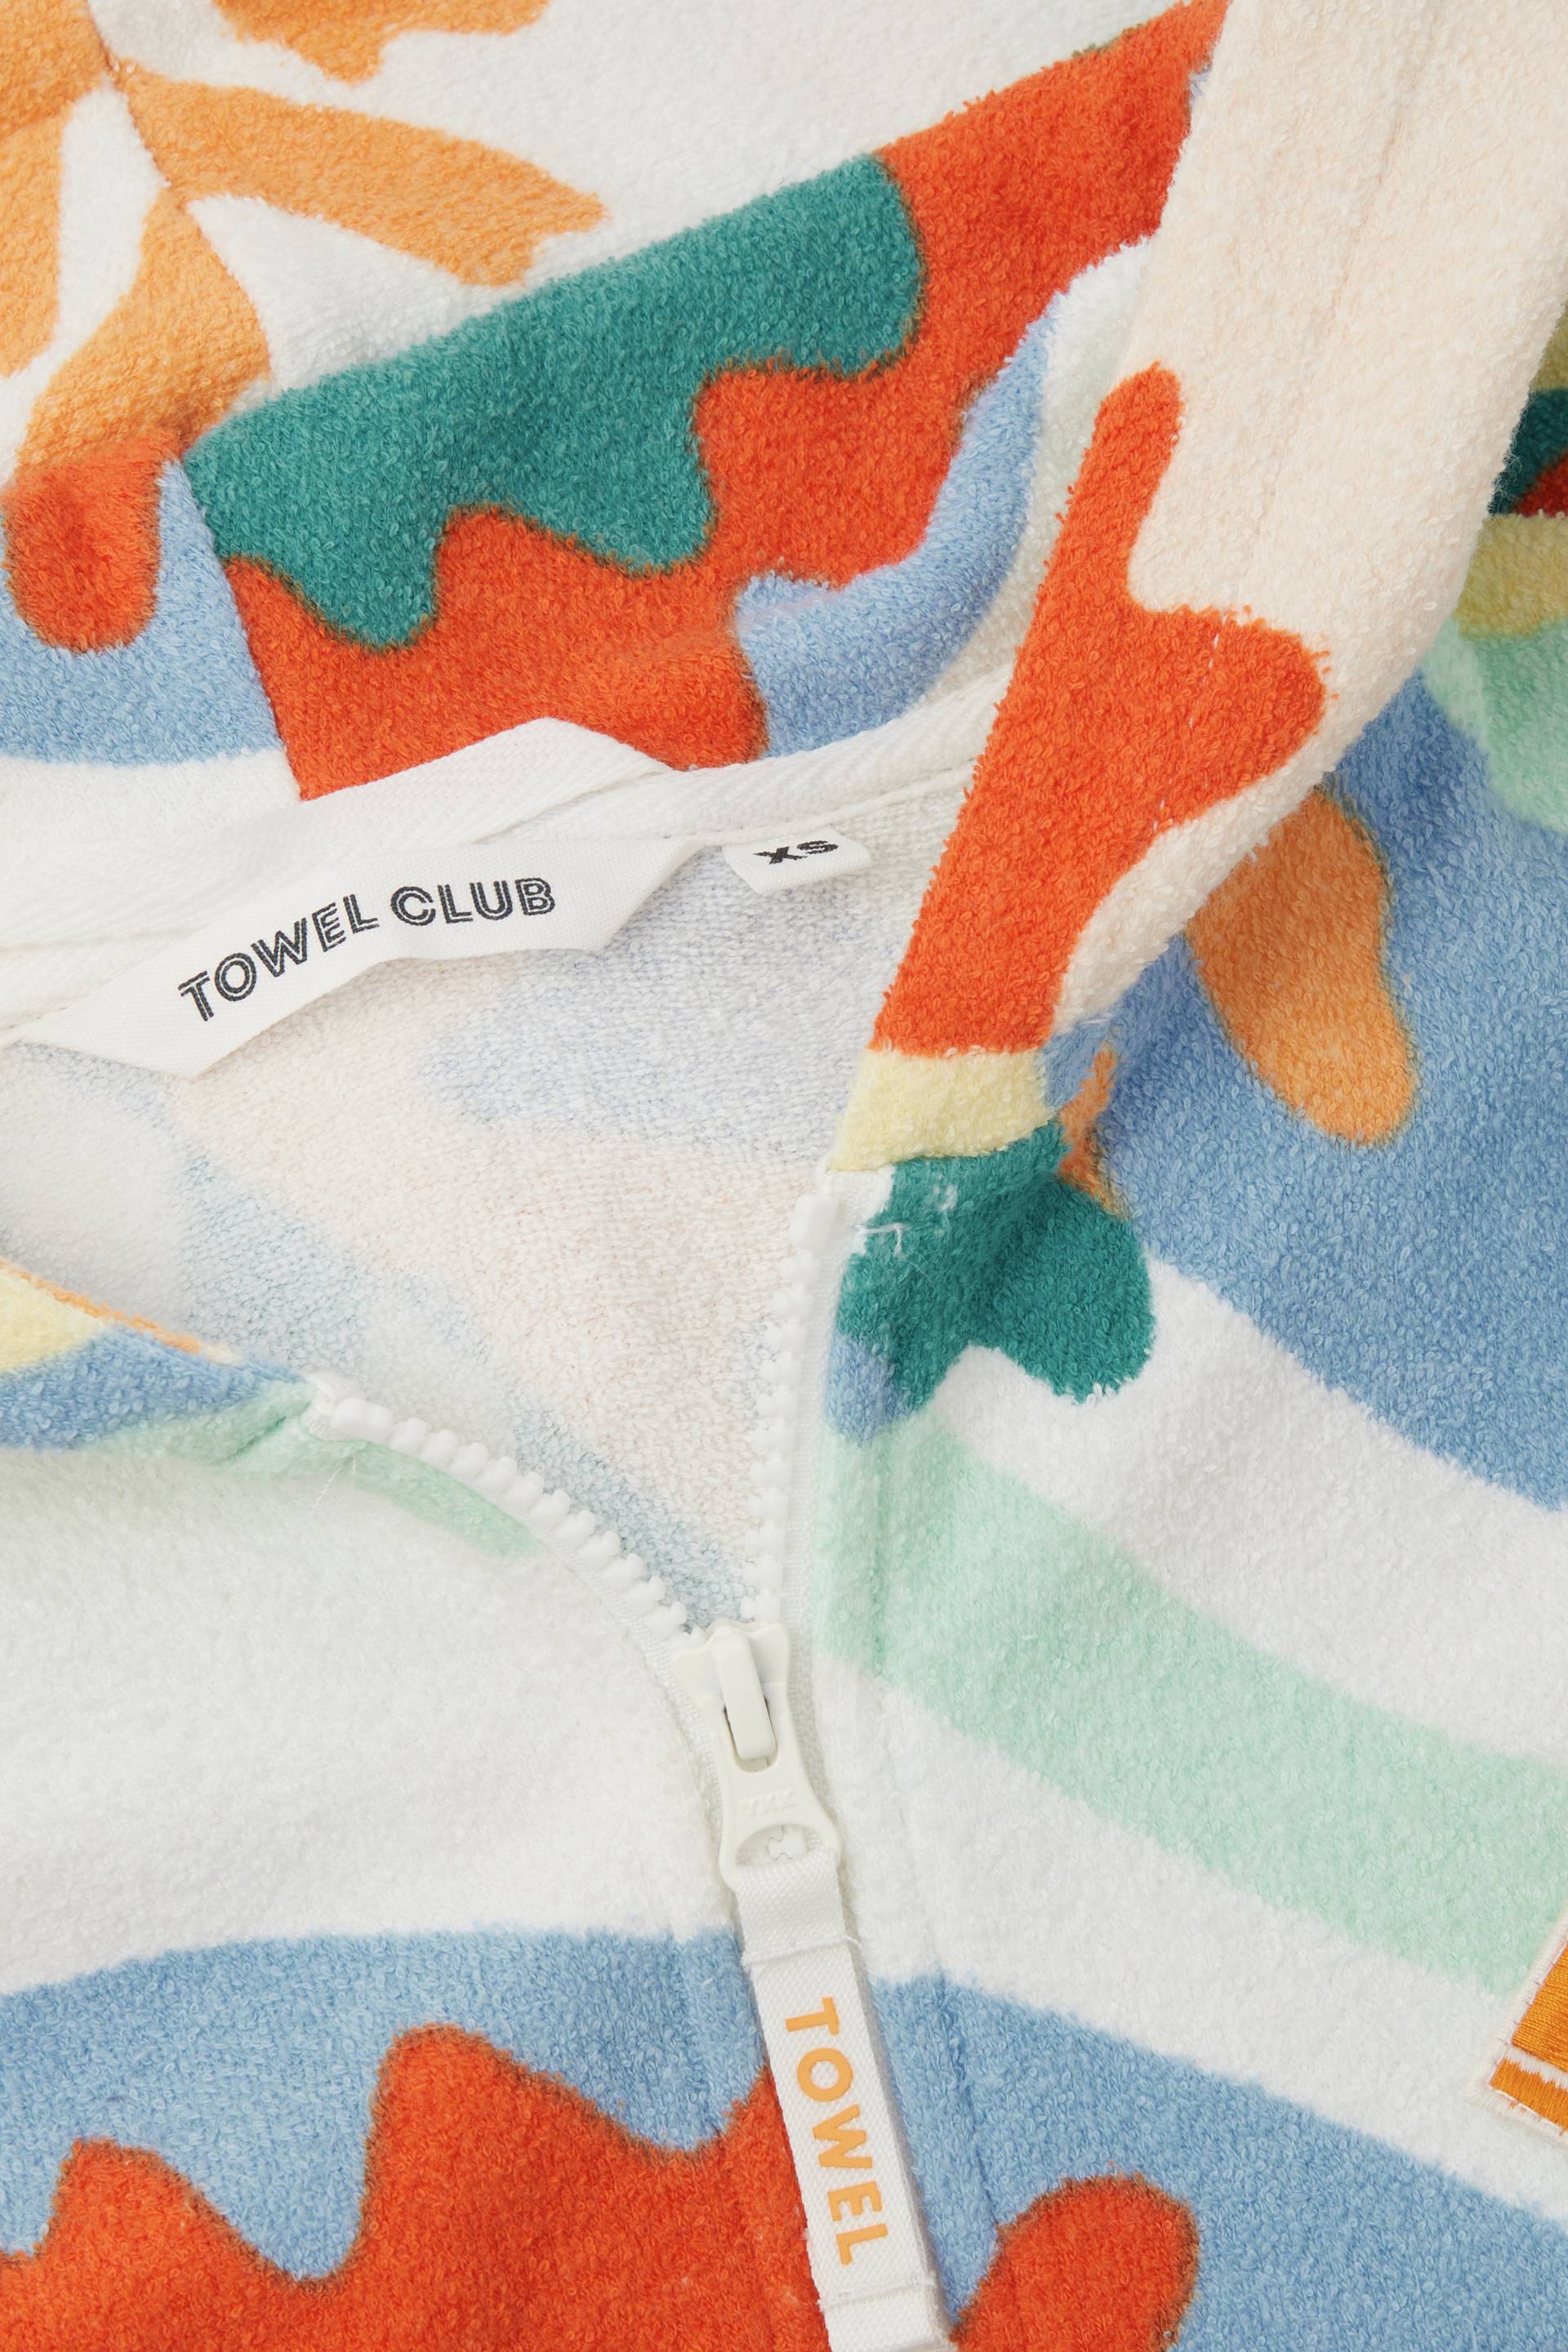 Towel Club Towel Club Short Fitted Jumpsuit Print - 3